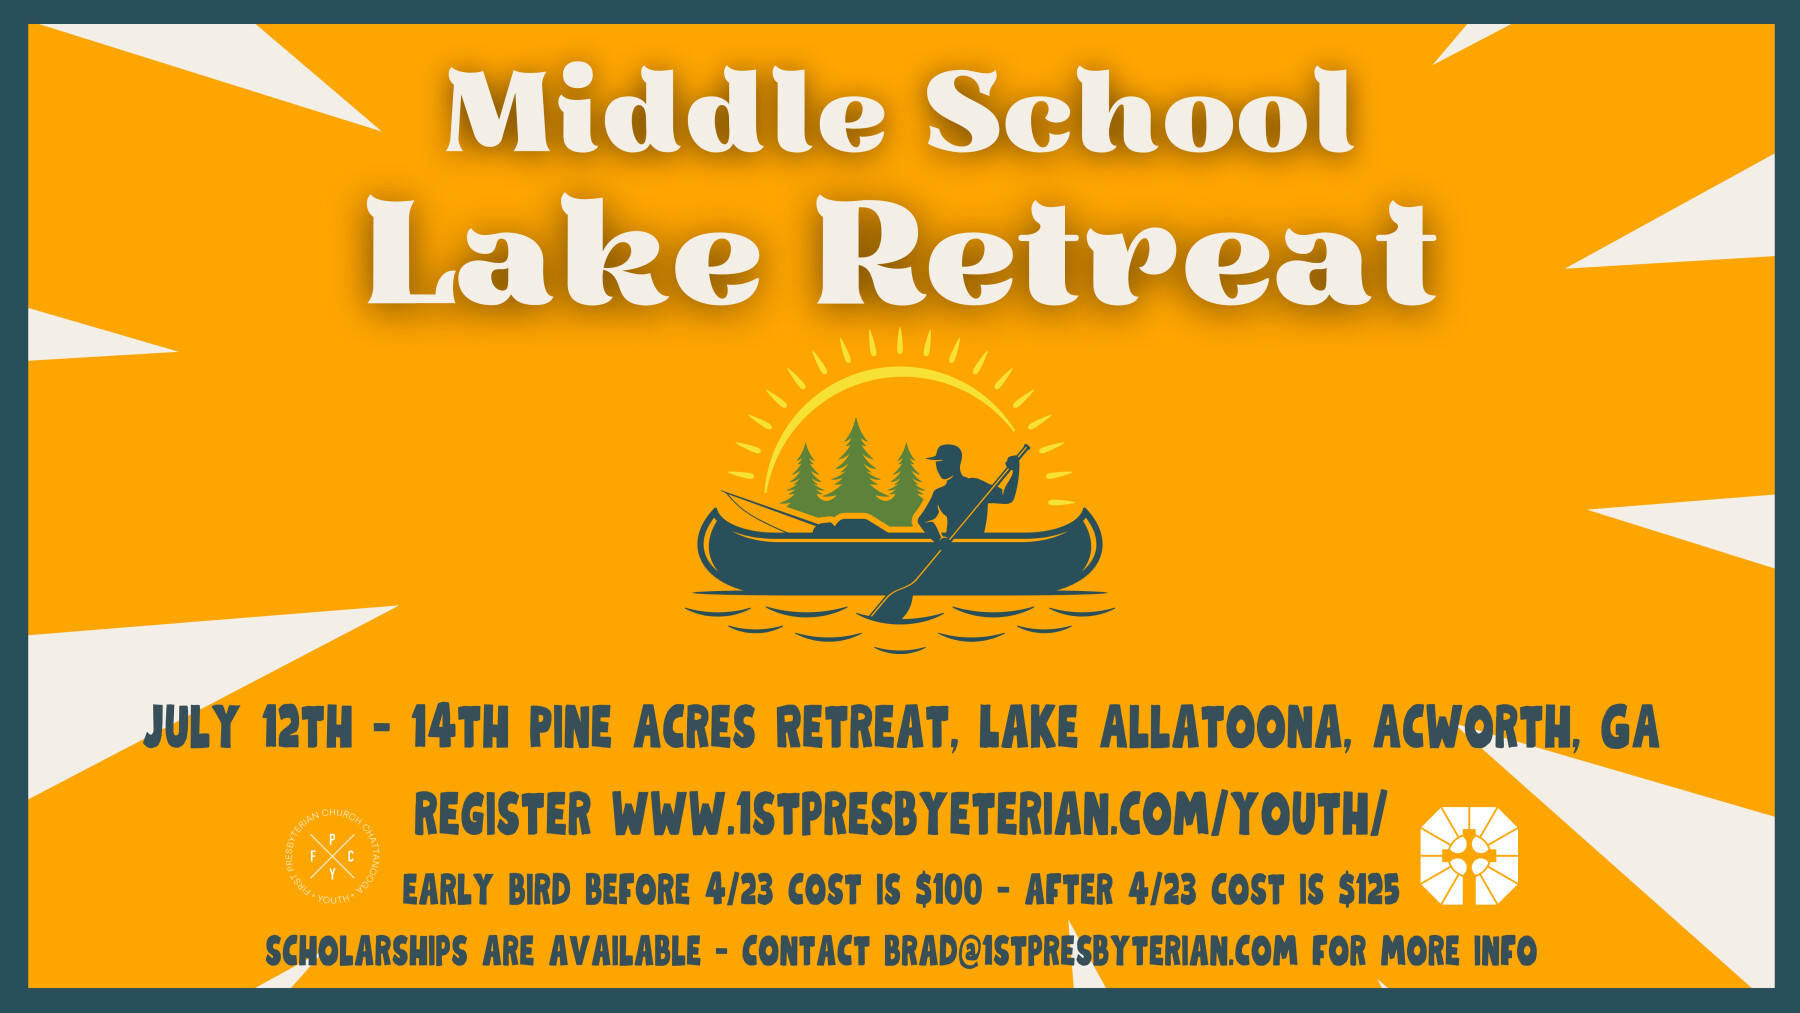 Middle School Lake Retreat